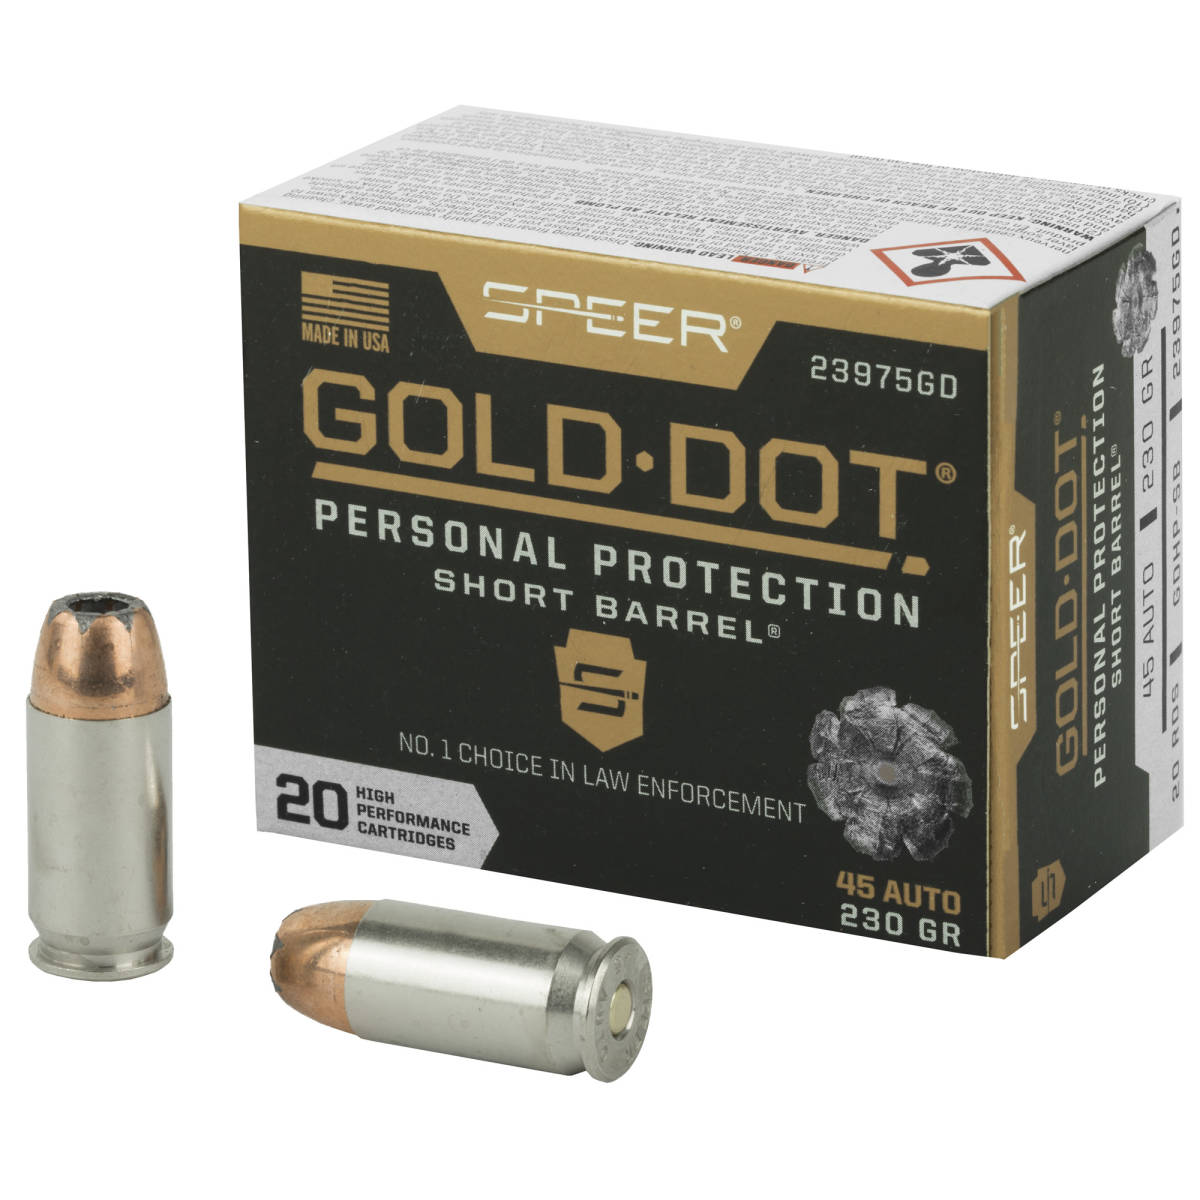 Speer 23975GD Gold Dot Personal Protection Short Barrel 45 ACP 230 gr...